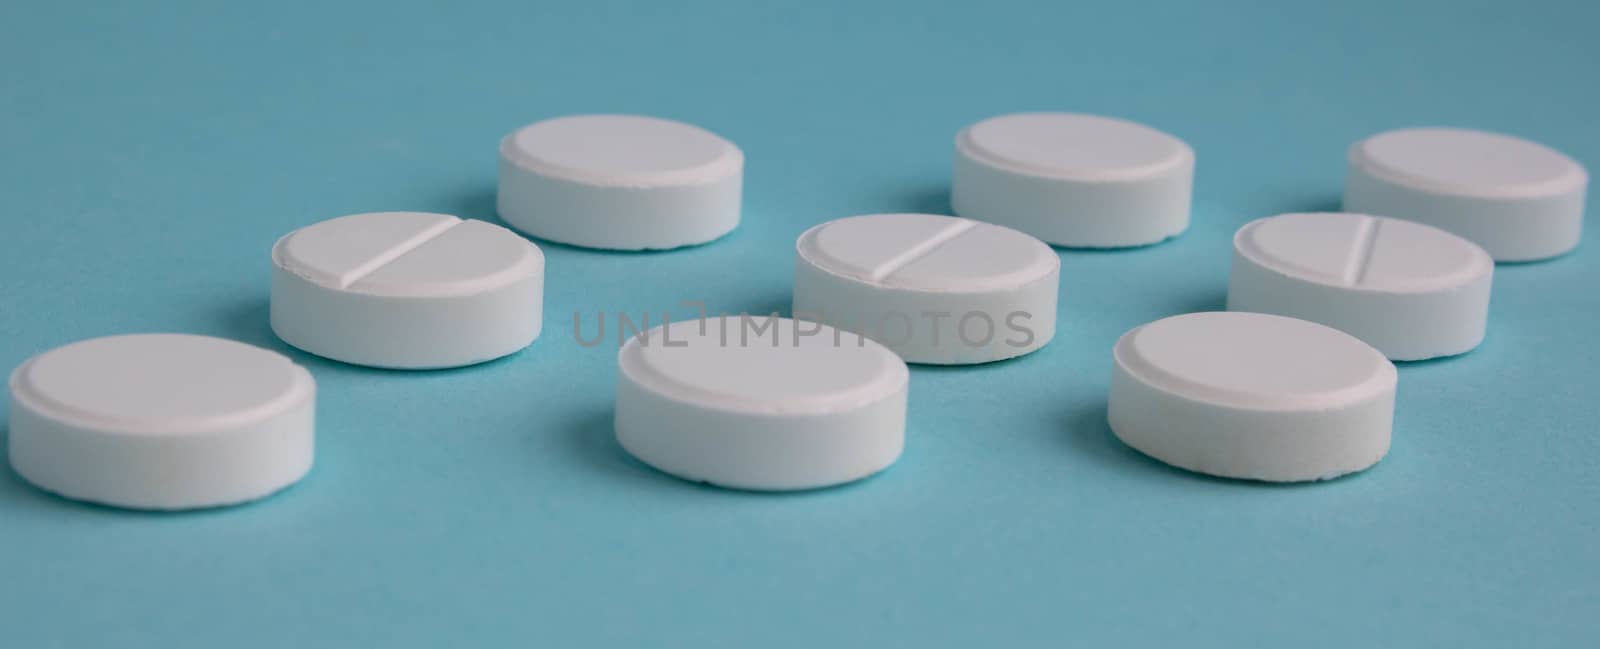 tablets from pharmaceuticals antibiotics medicine tablets antibacterial tablets by lapushka62